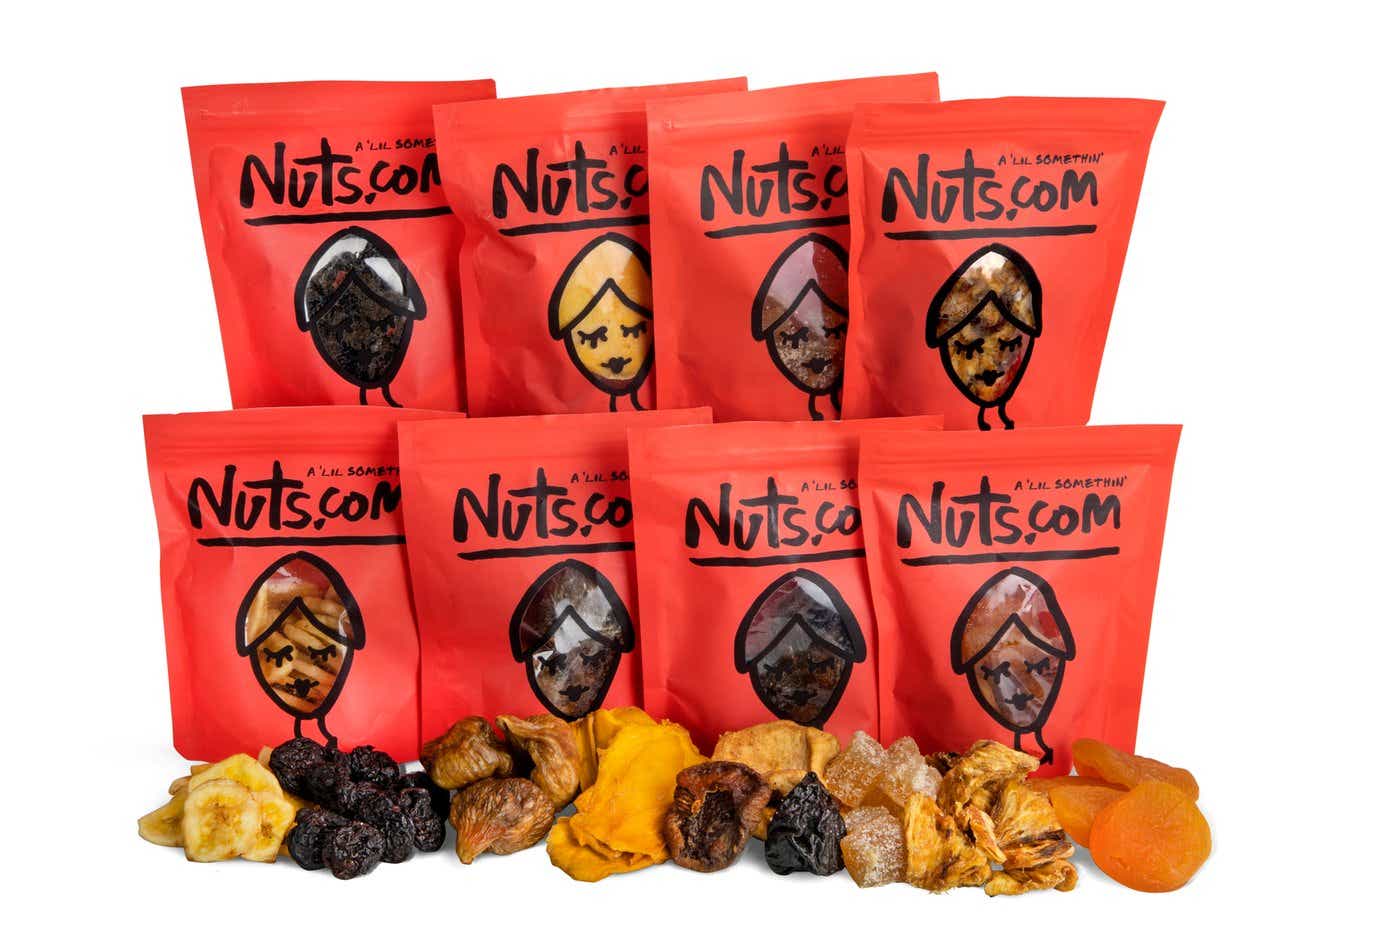 nuts.com dried fruit sampler